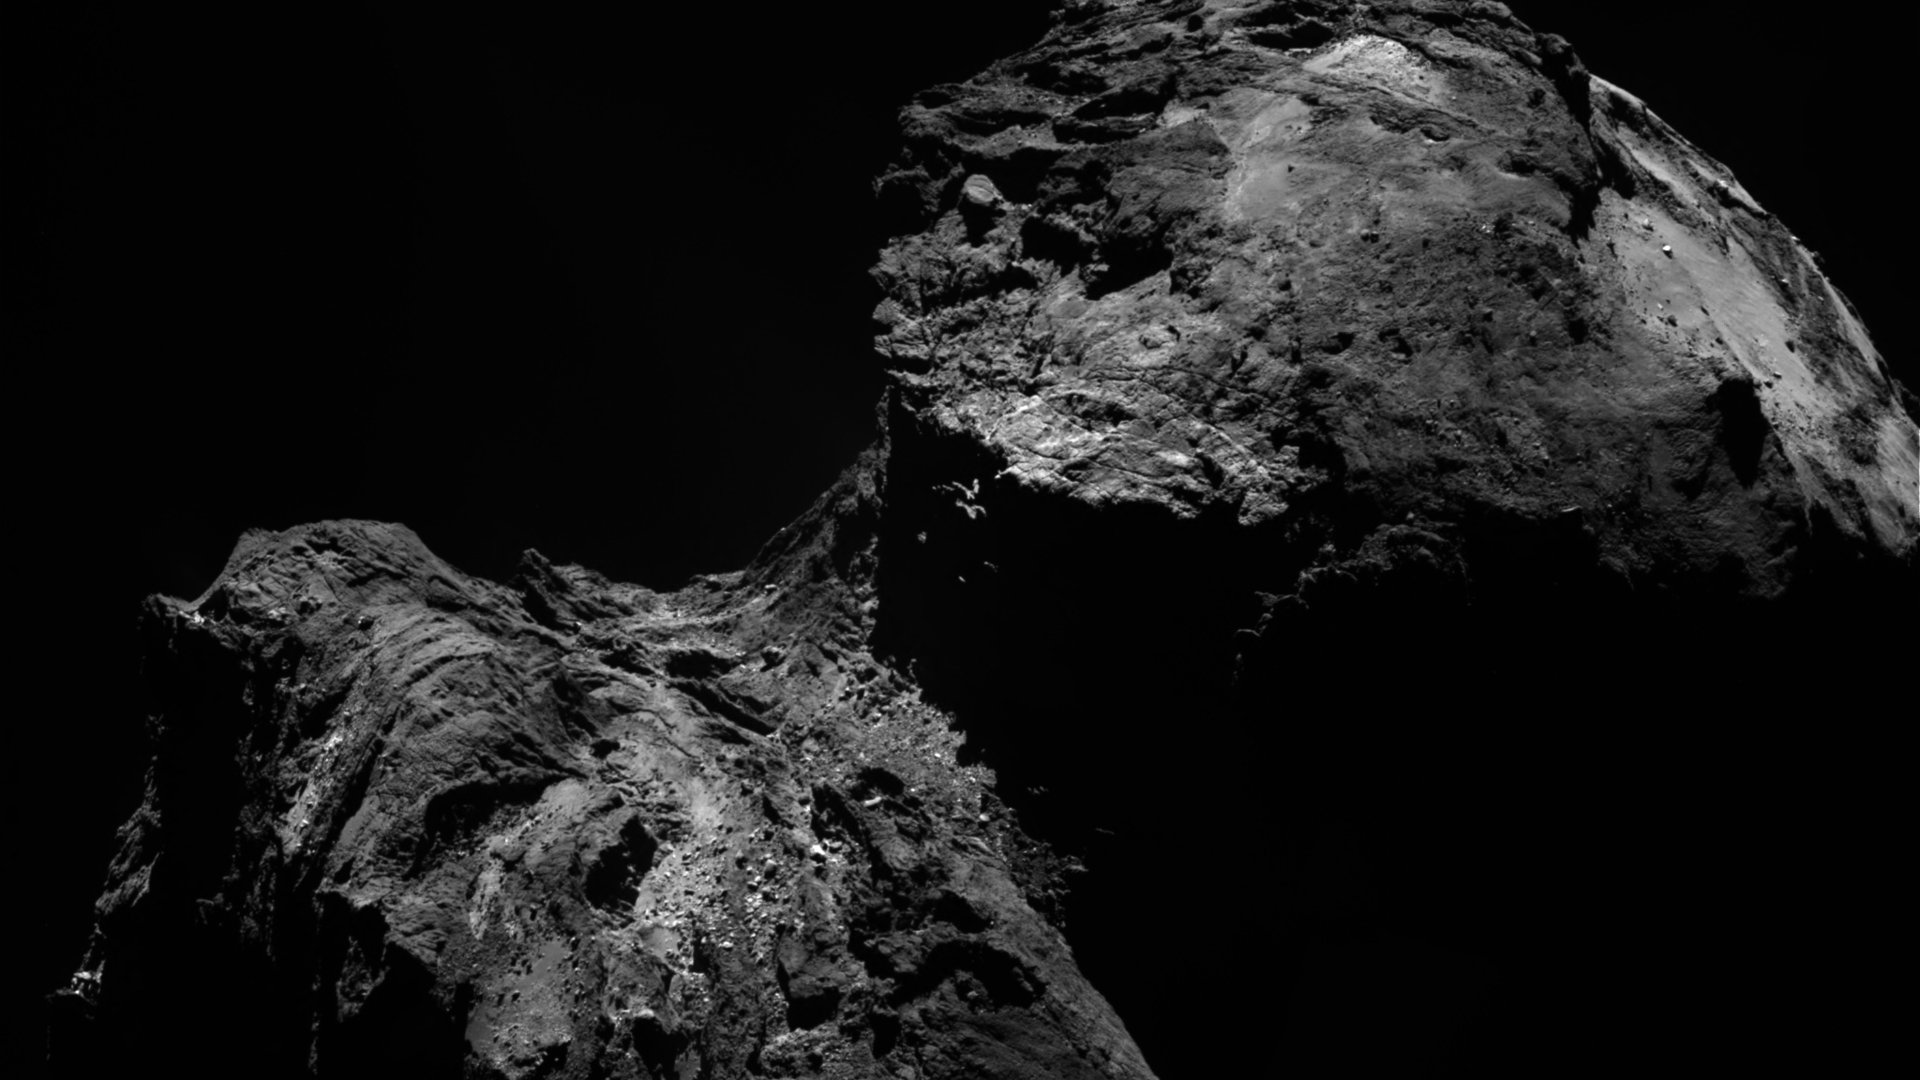 Comet_on_10_December_2015_from_OSIRIS_narrow-angle_camera_highlight_mob.jpg